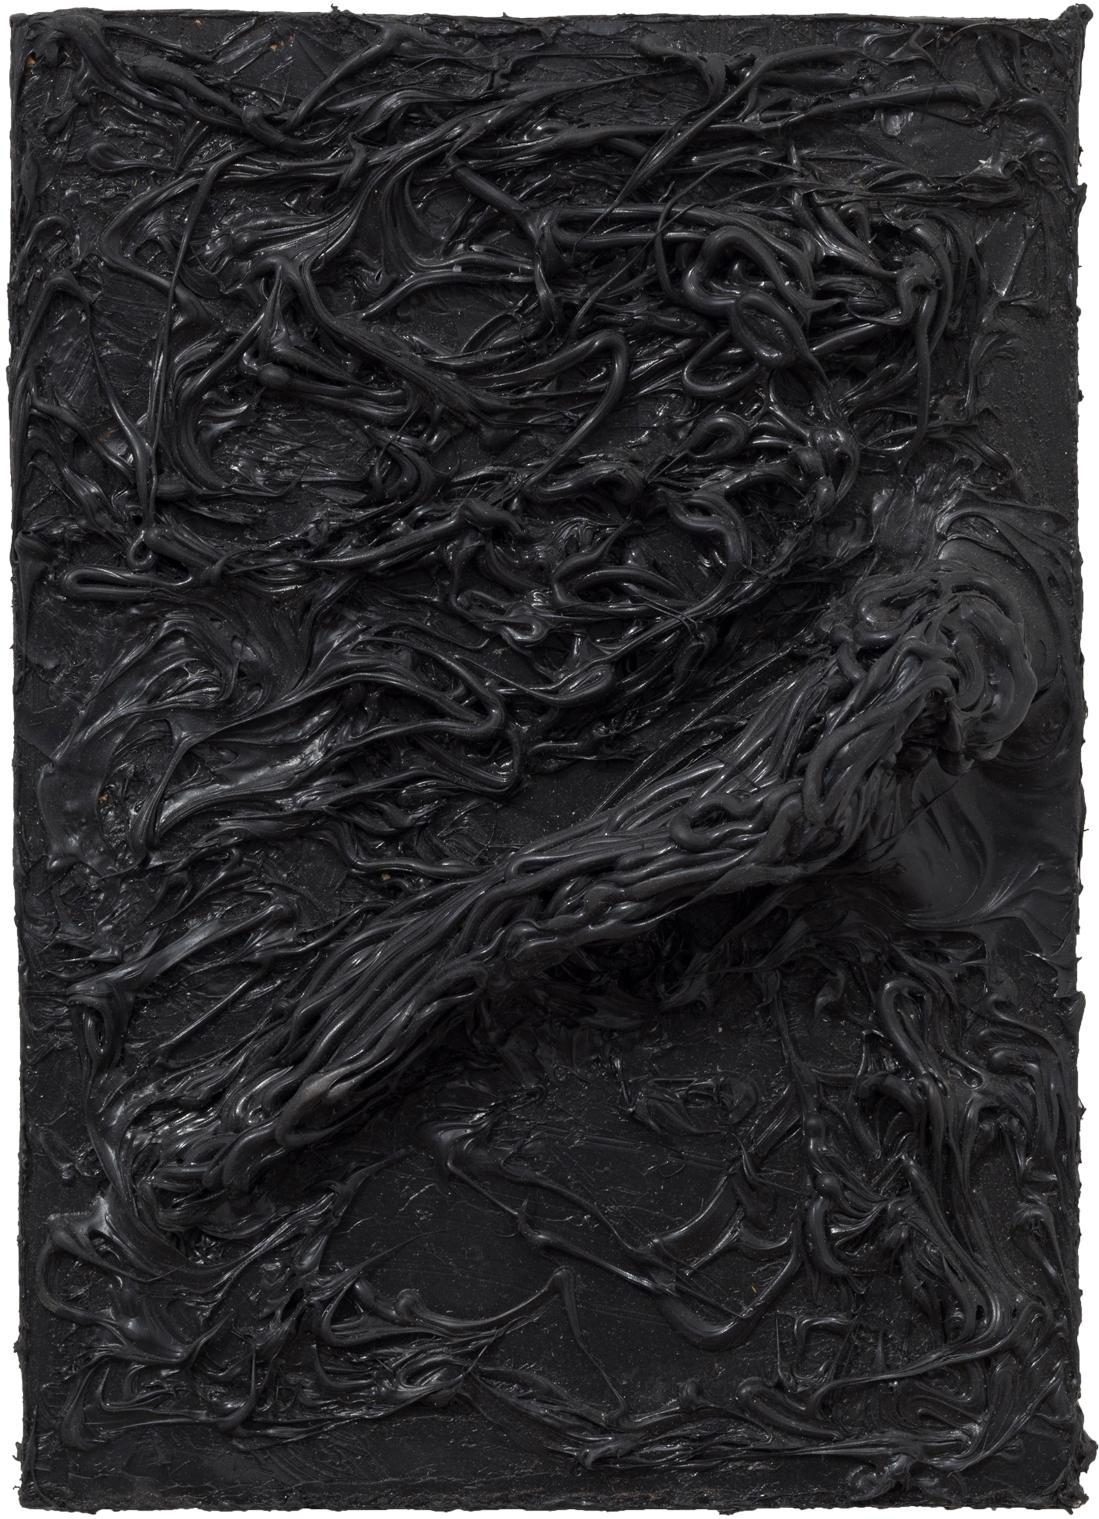 Untitled 04 - Contemporary, Black, Organic, Abstract, Monochrome, 21st Century